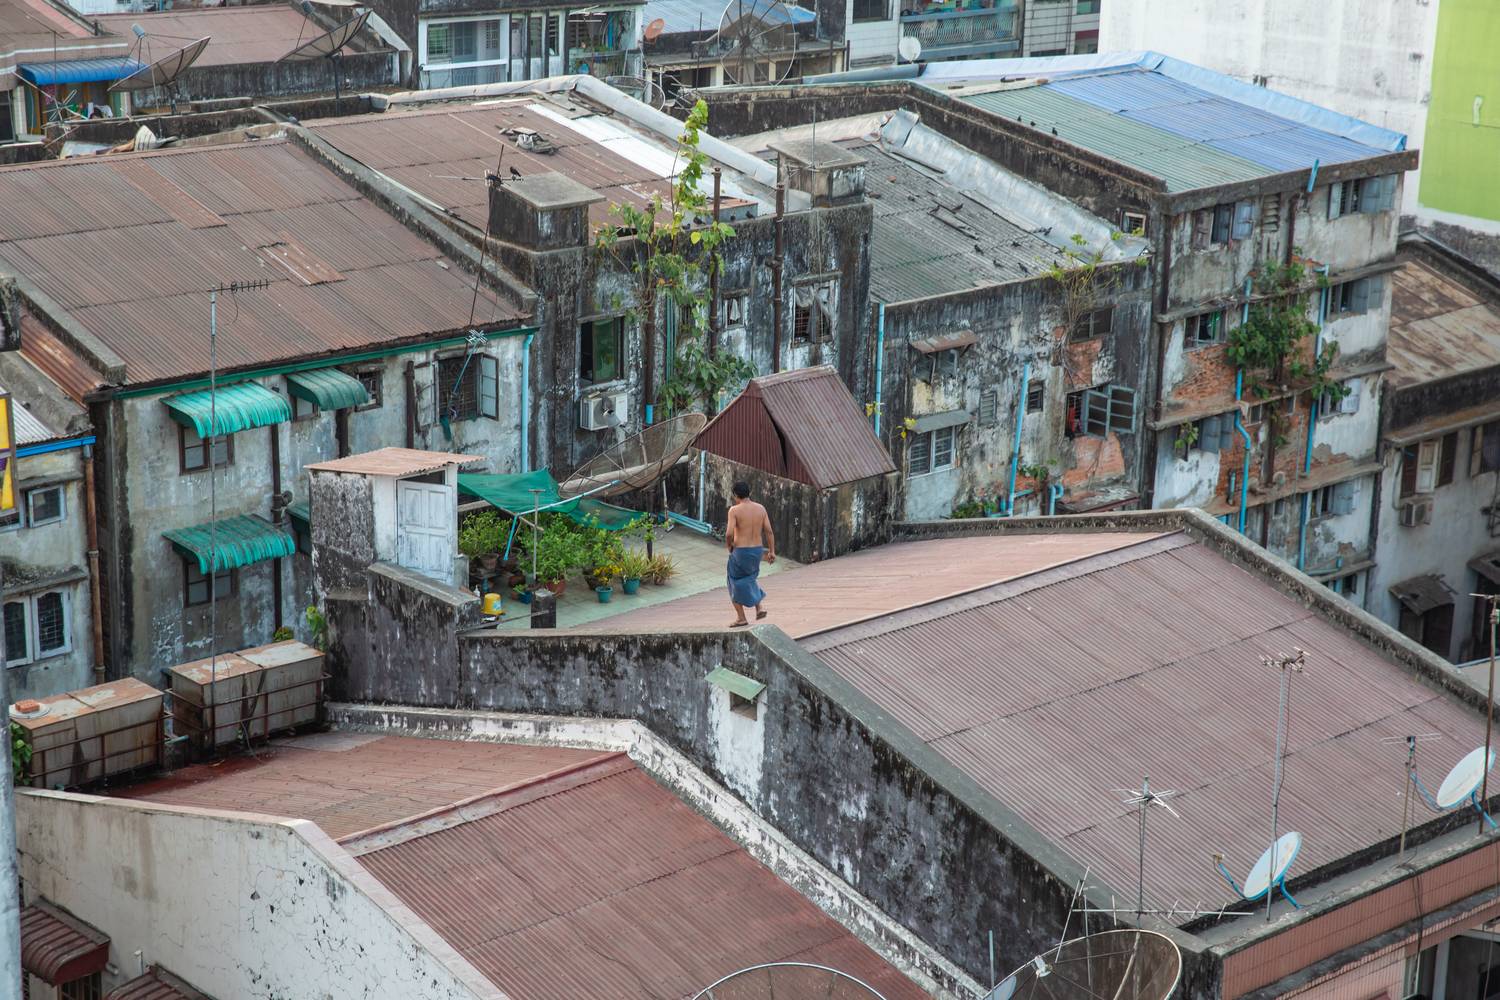 Leben auf dem Dach, Yangon (Rangun) Myanmar (Burma) from Miro May